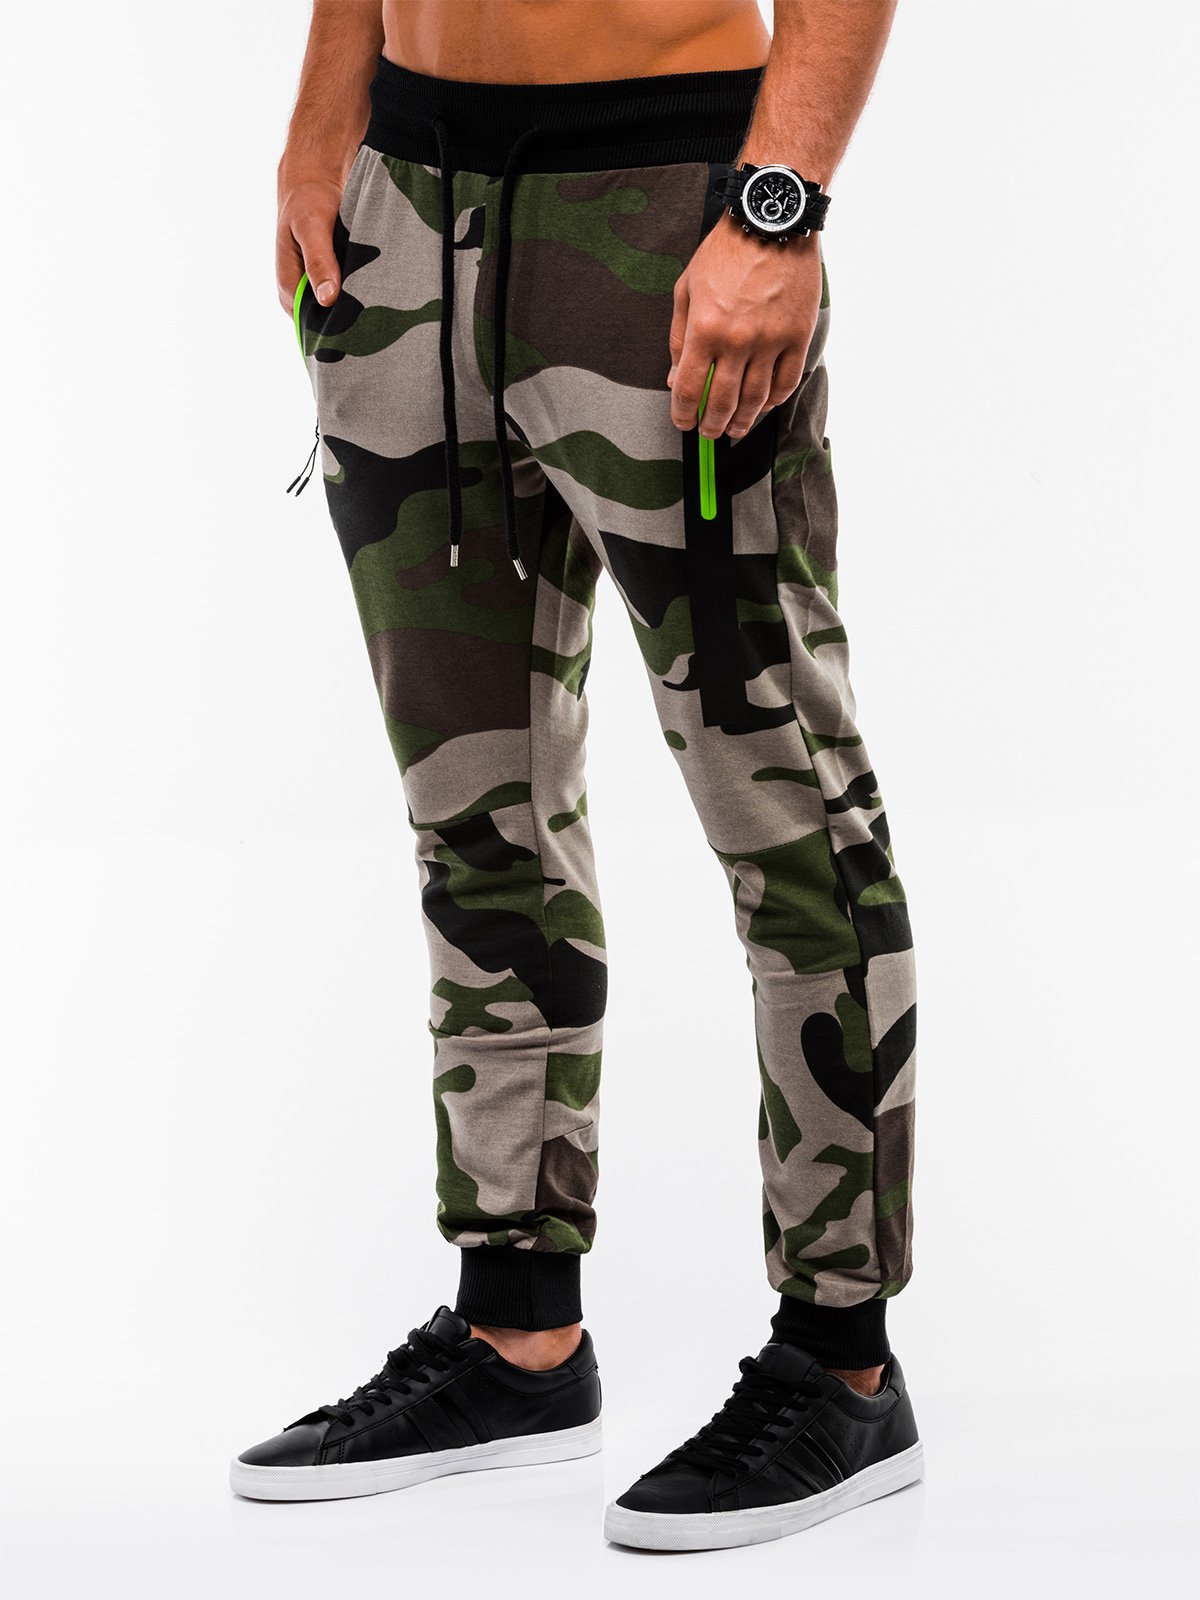 Men's sweatpants P636 - green/camo | MODONE wholesale - Clothing For Men